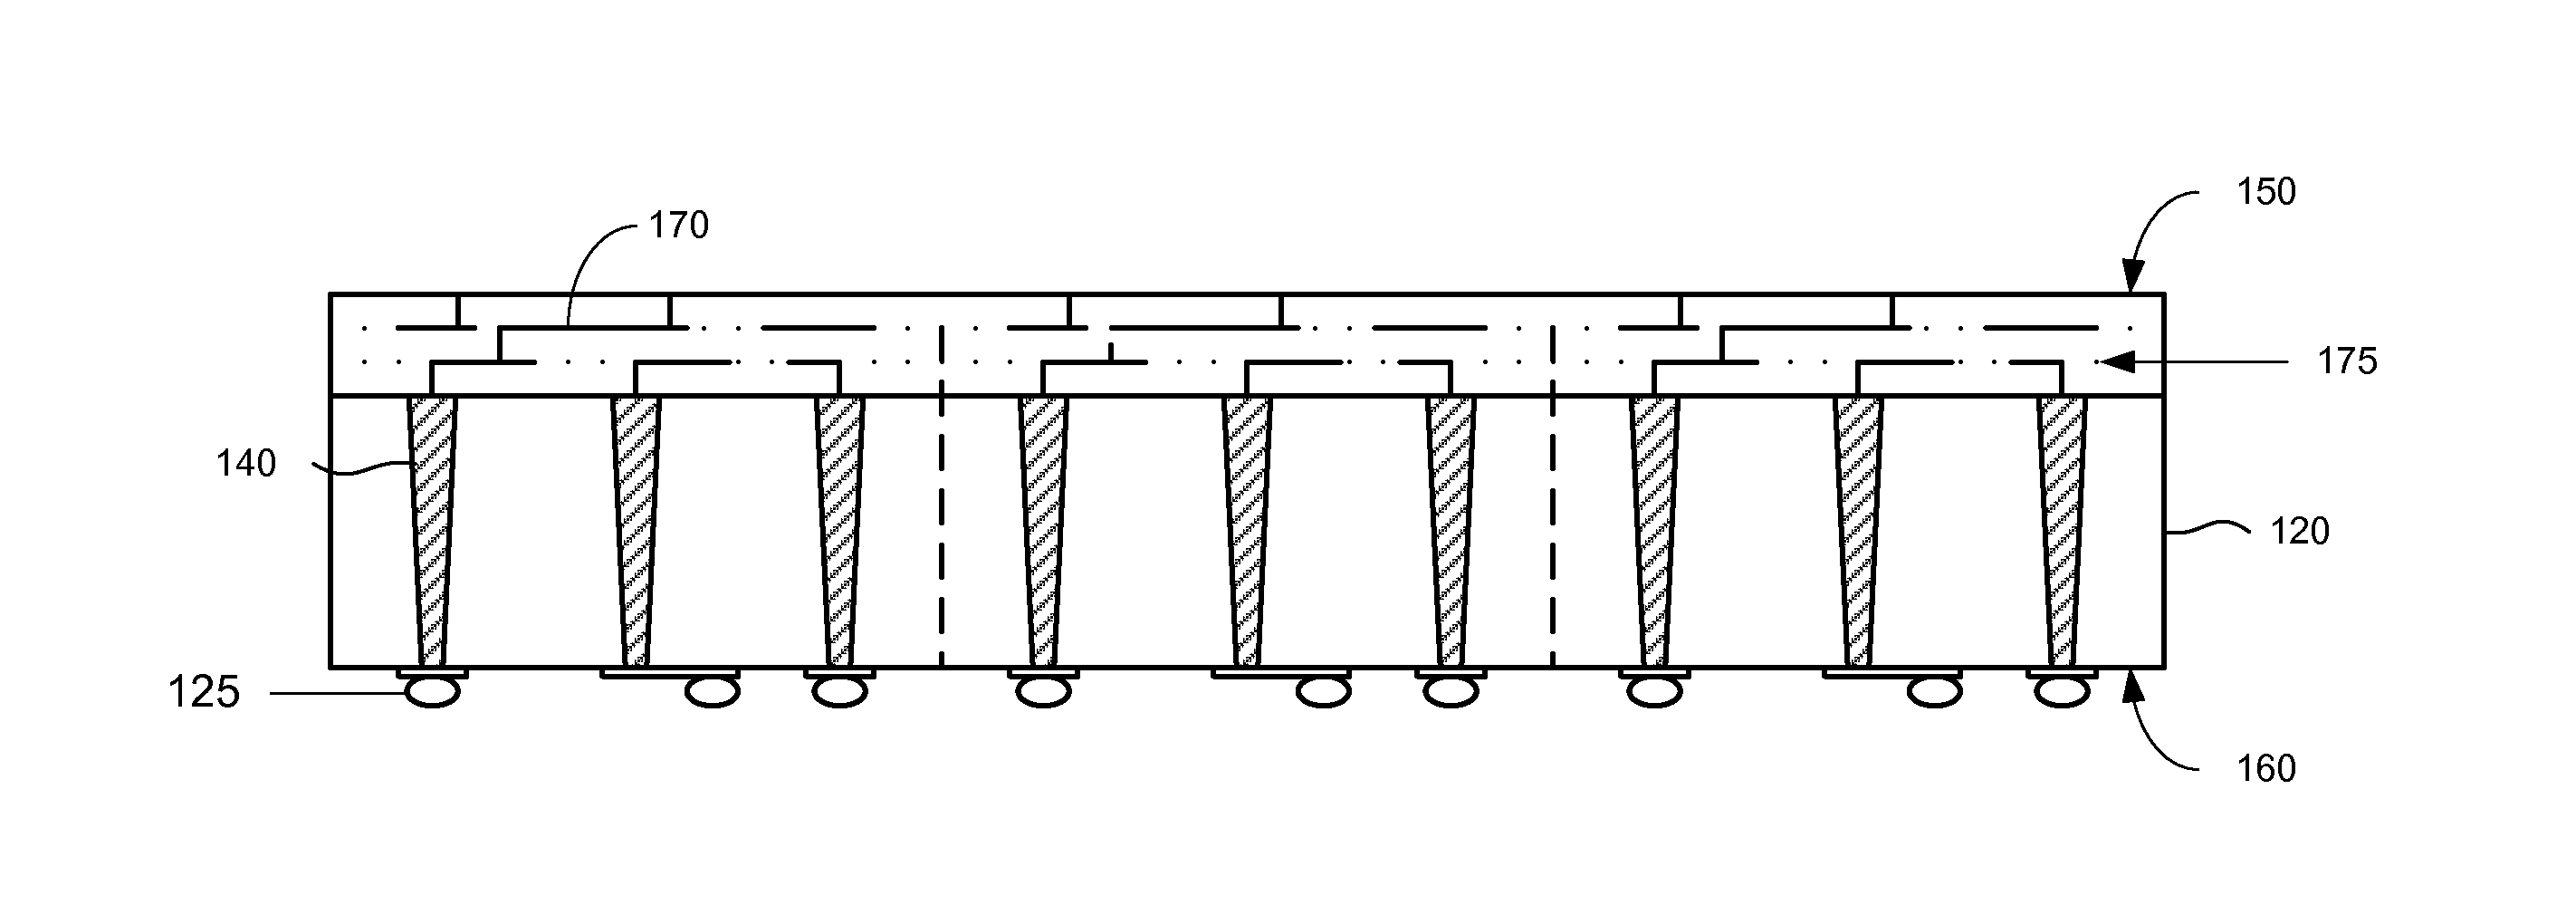 Parallel Signal Via Structure